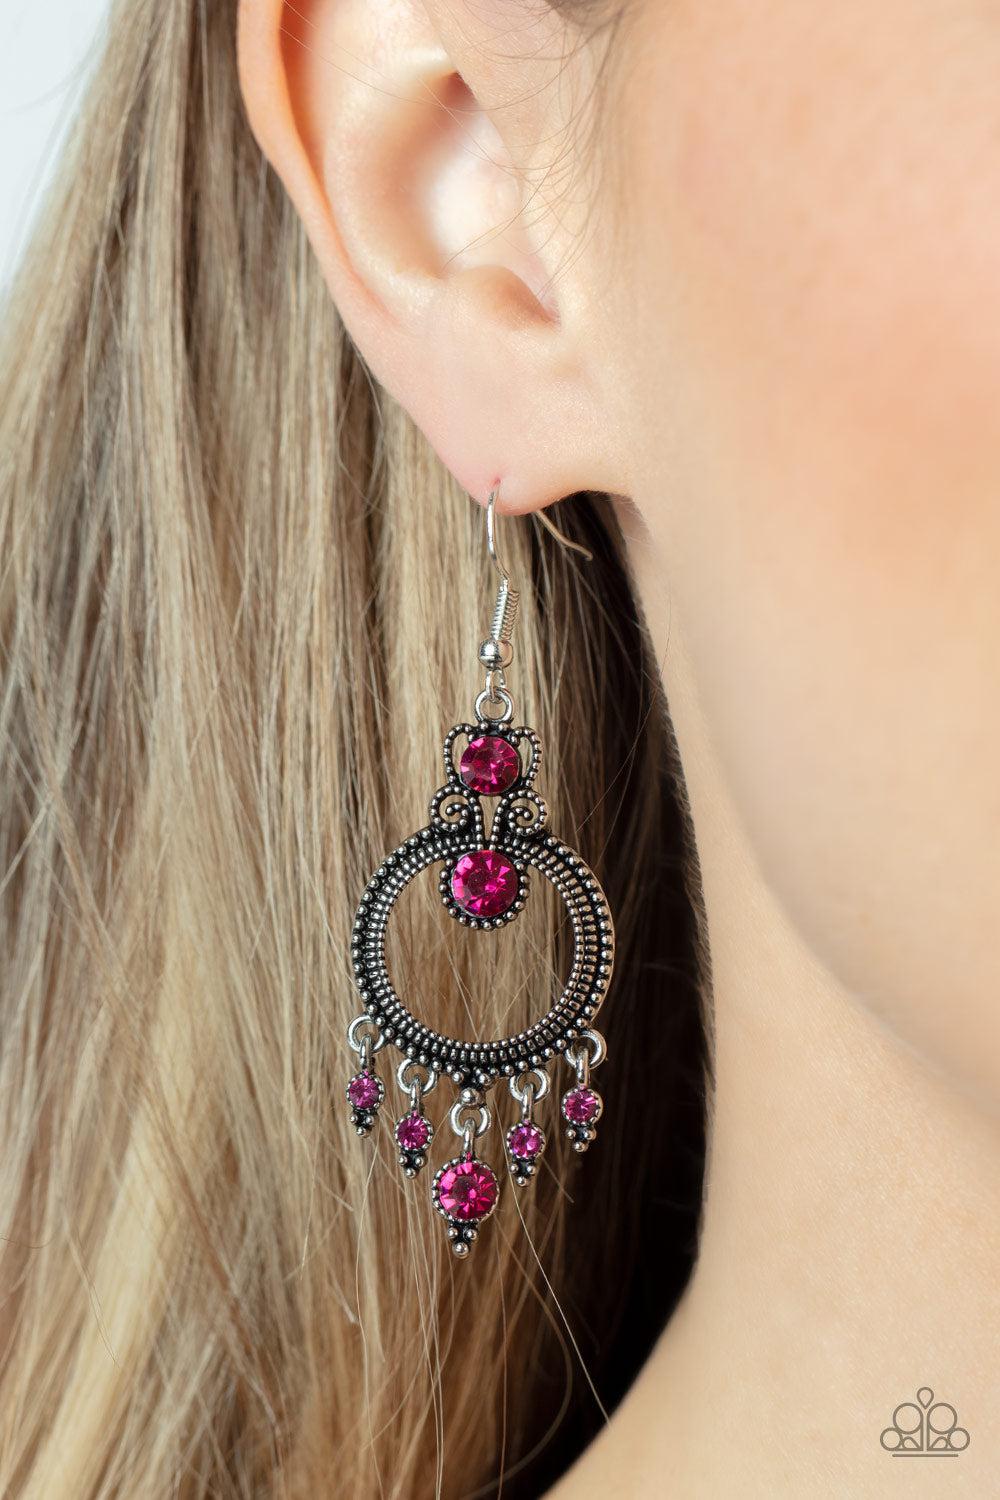 Palace Politics Pink Rhinestone Earrings - Paparazzi Accessories-on model - CarasShop.com - $5 Jewelry by Cara Jewels